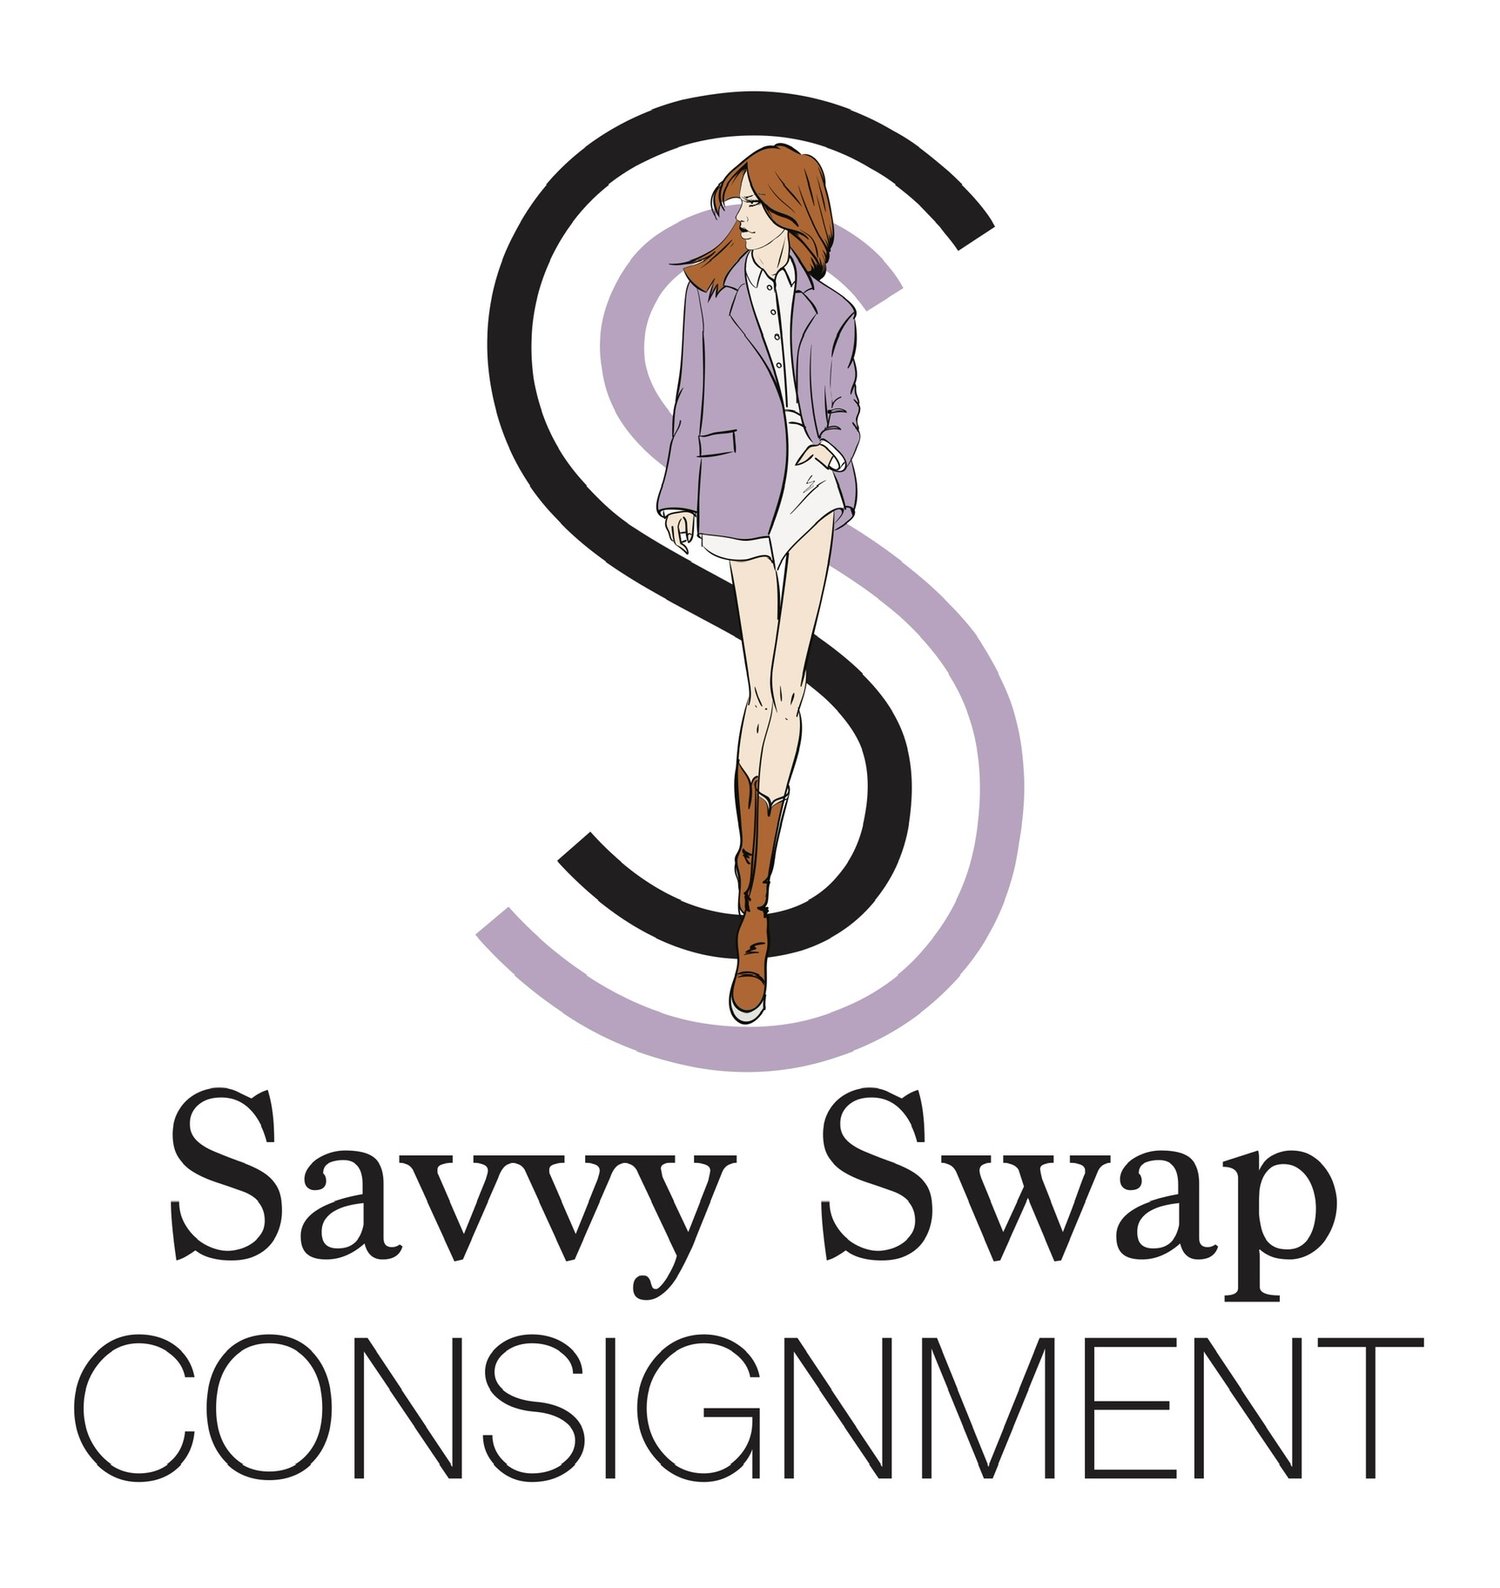 Savvy Swap Consignment